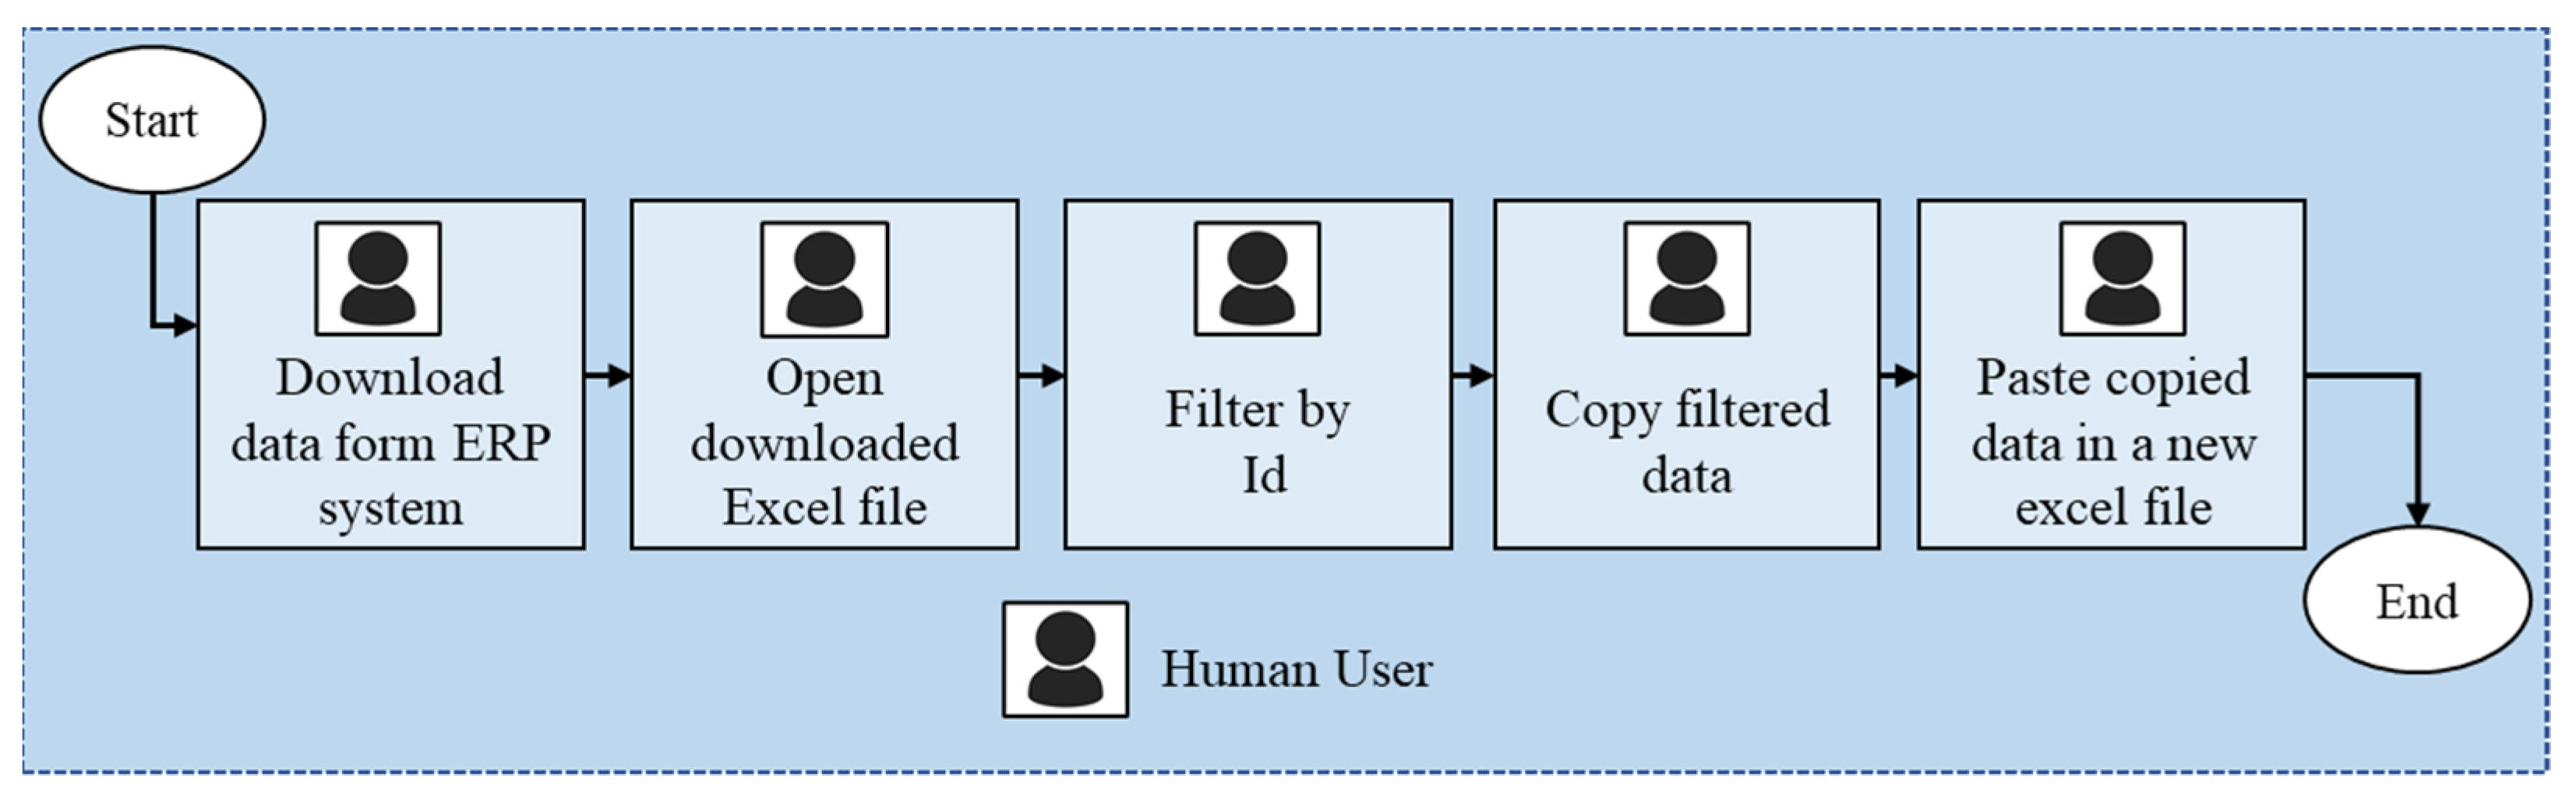 Digital task. Матрица выбора процессов — process selection Matrix. Quick start pdf.